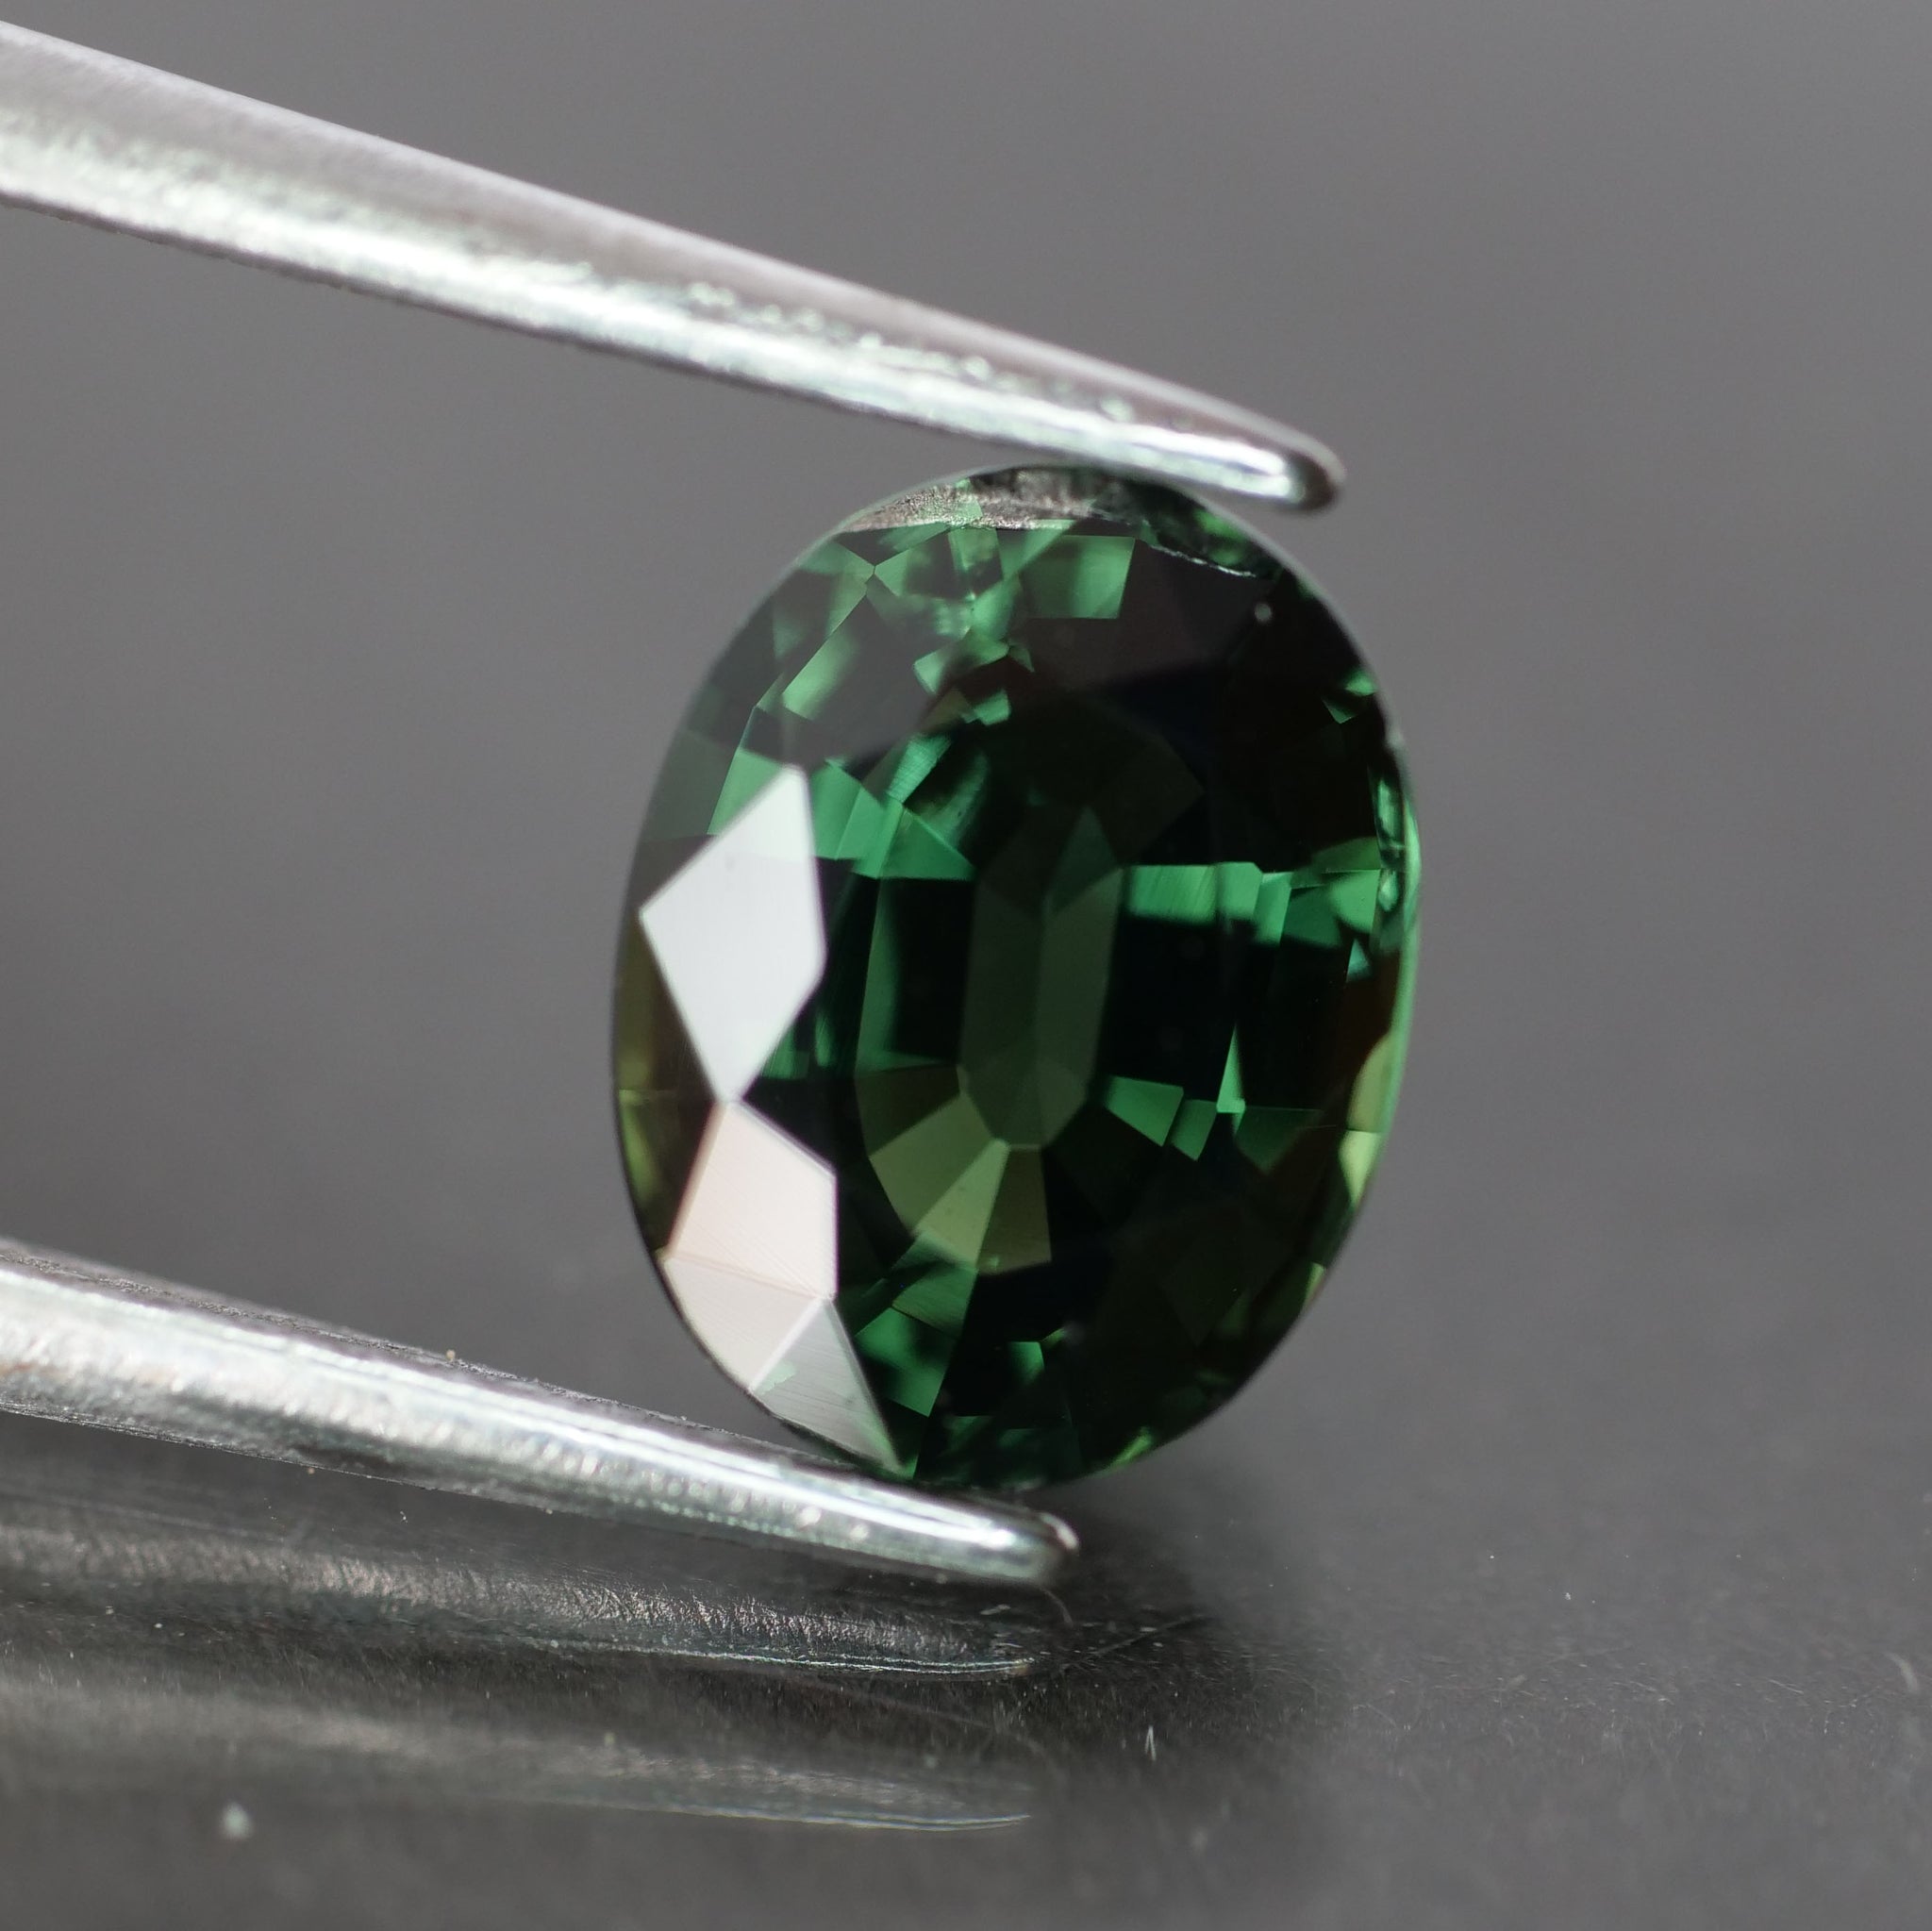 Sapphire | natural, green, oval cut 8x6 mm, VS, 1.85 ct - Eden Garden Jewelry™